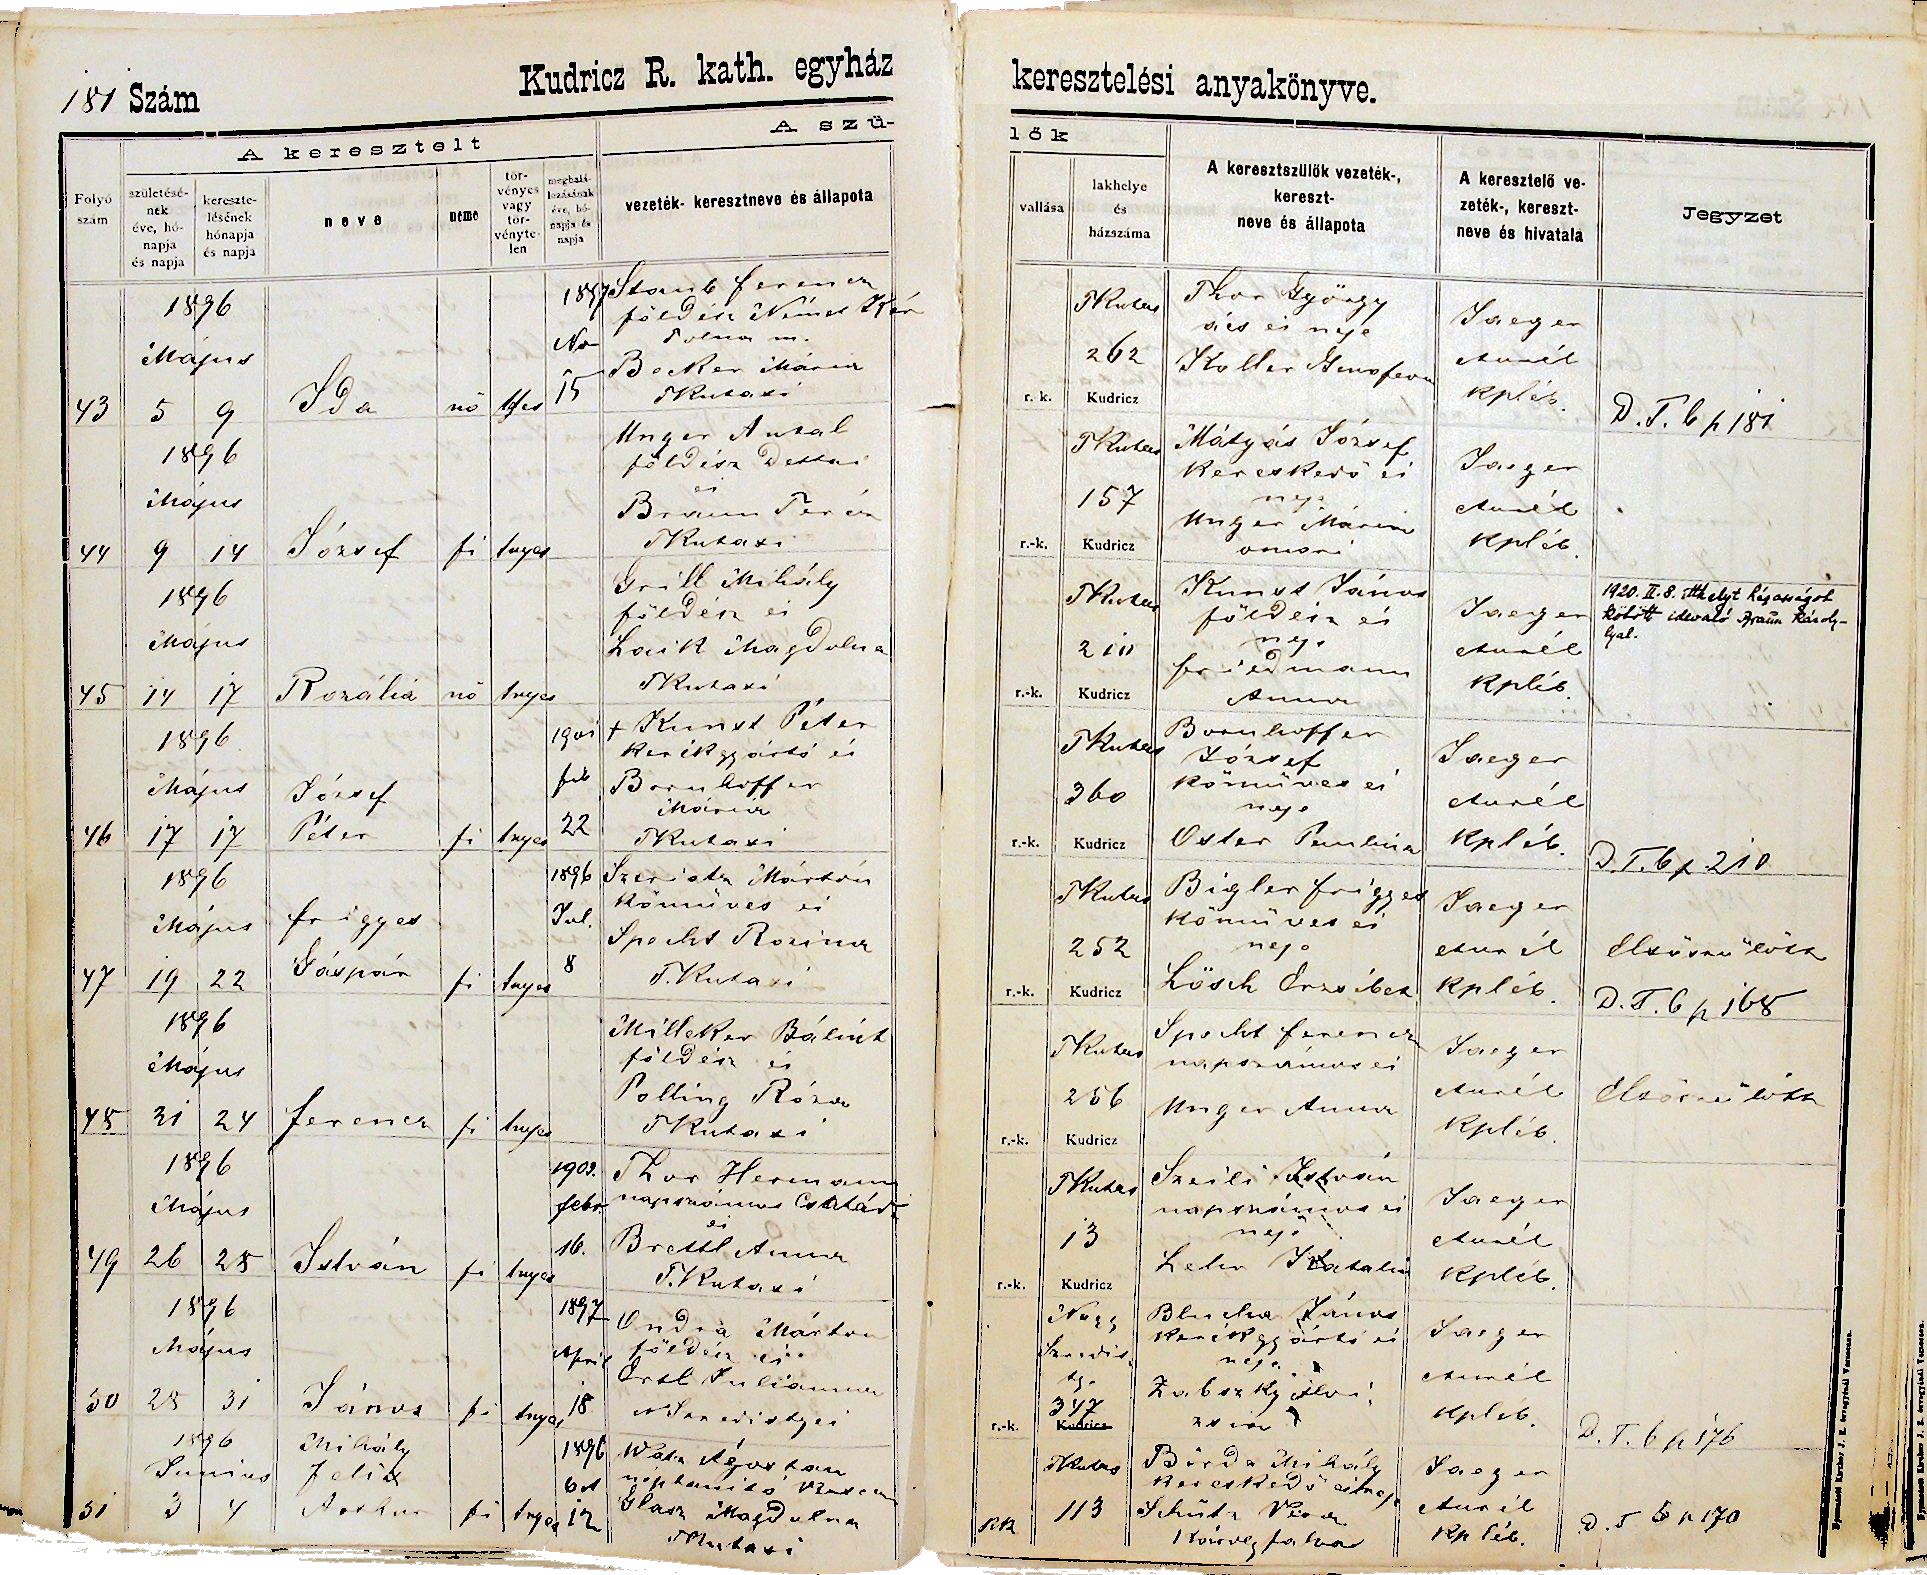 images/church_records/BIRTHS/1884-1899B/1896/181